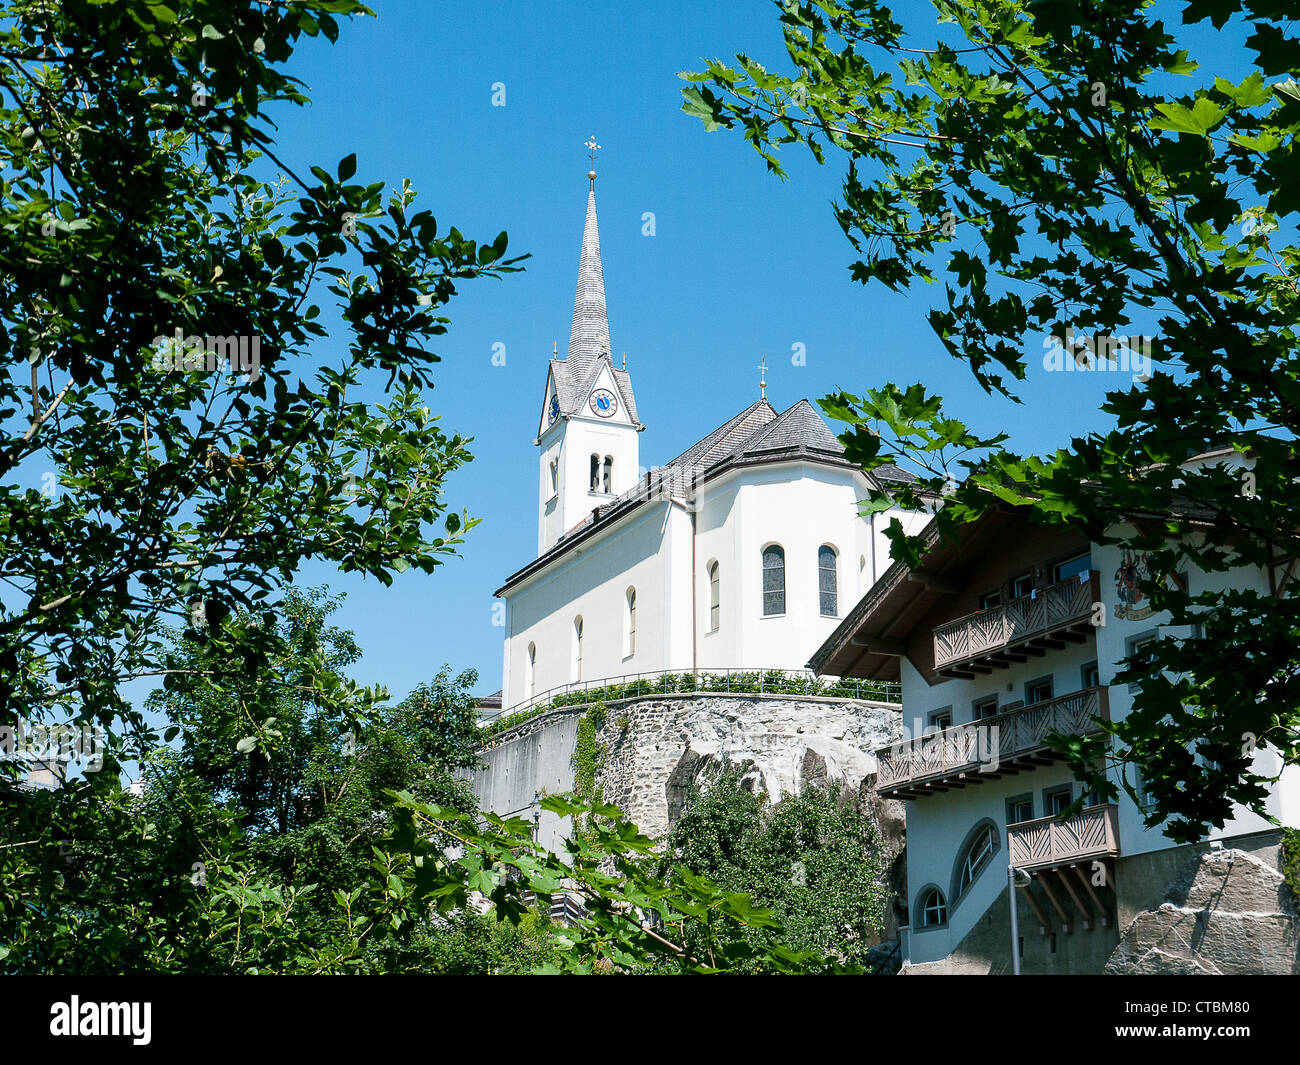 Traditional Church in Tyrolean village of Kaprun at the foot of the Kitzsteinhorn Mountain in Austria Stock Photo